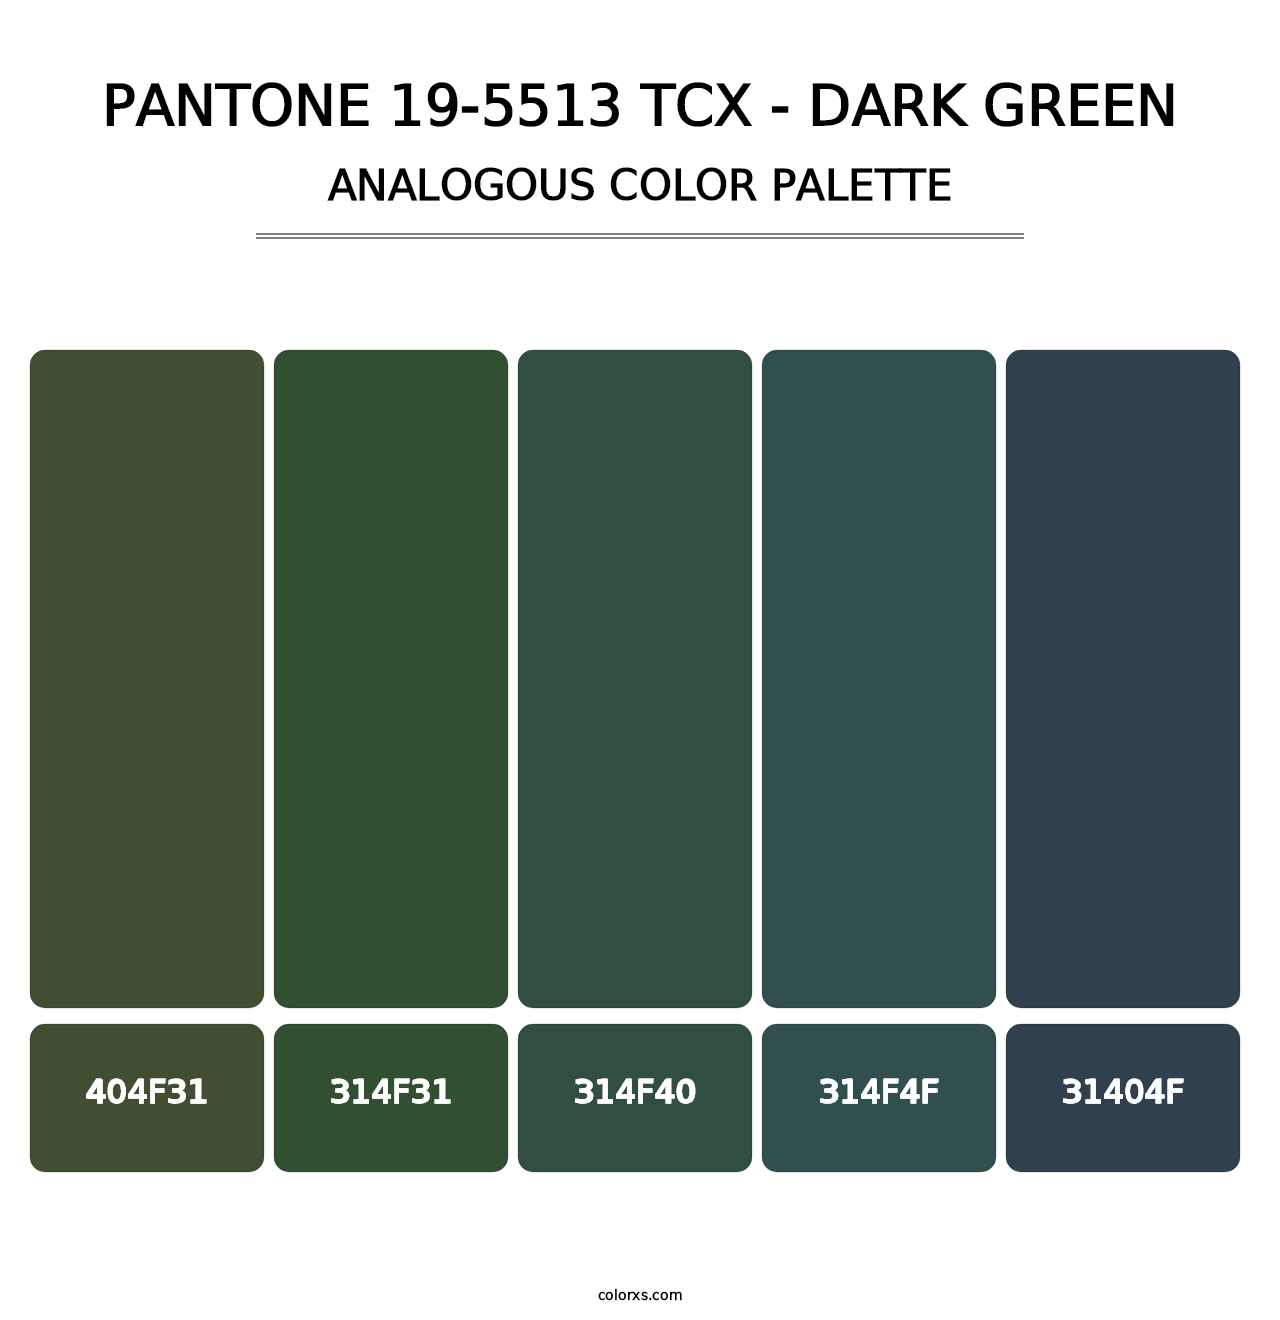 PANTONE 19-5513 TCX - Dark Green - Analogous Color Palette